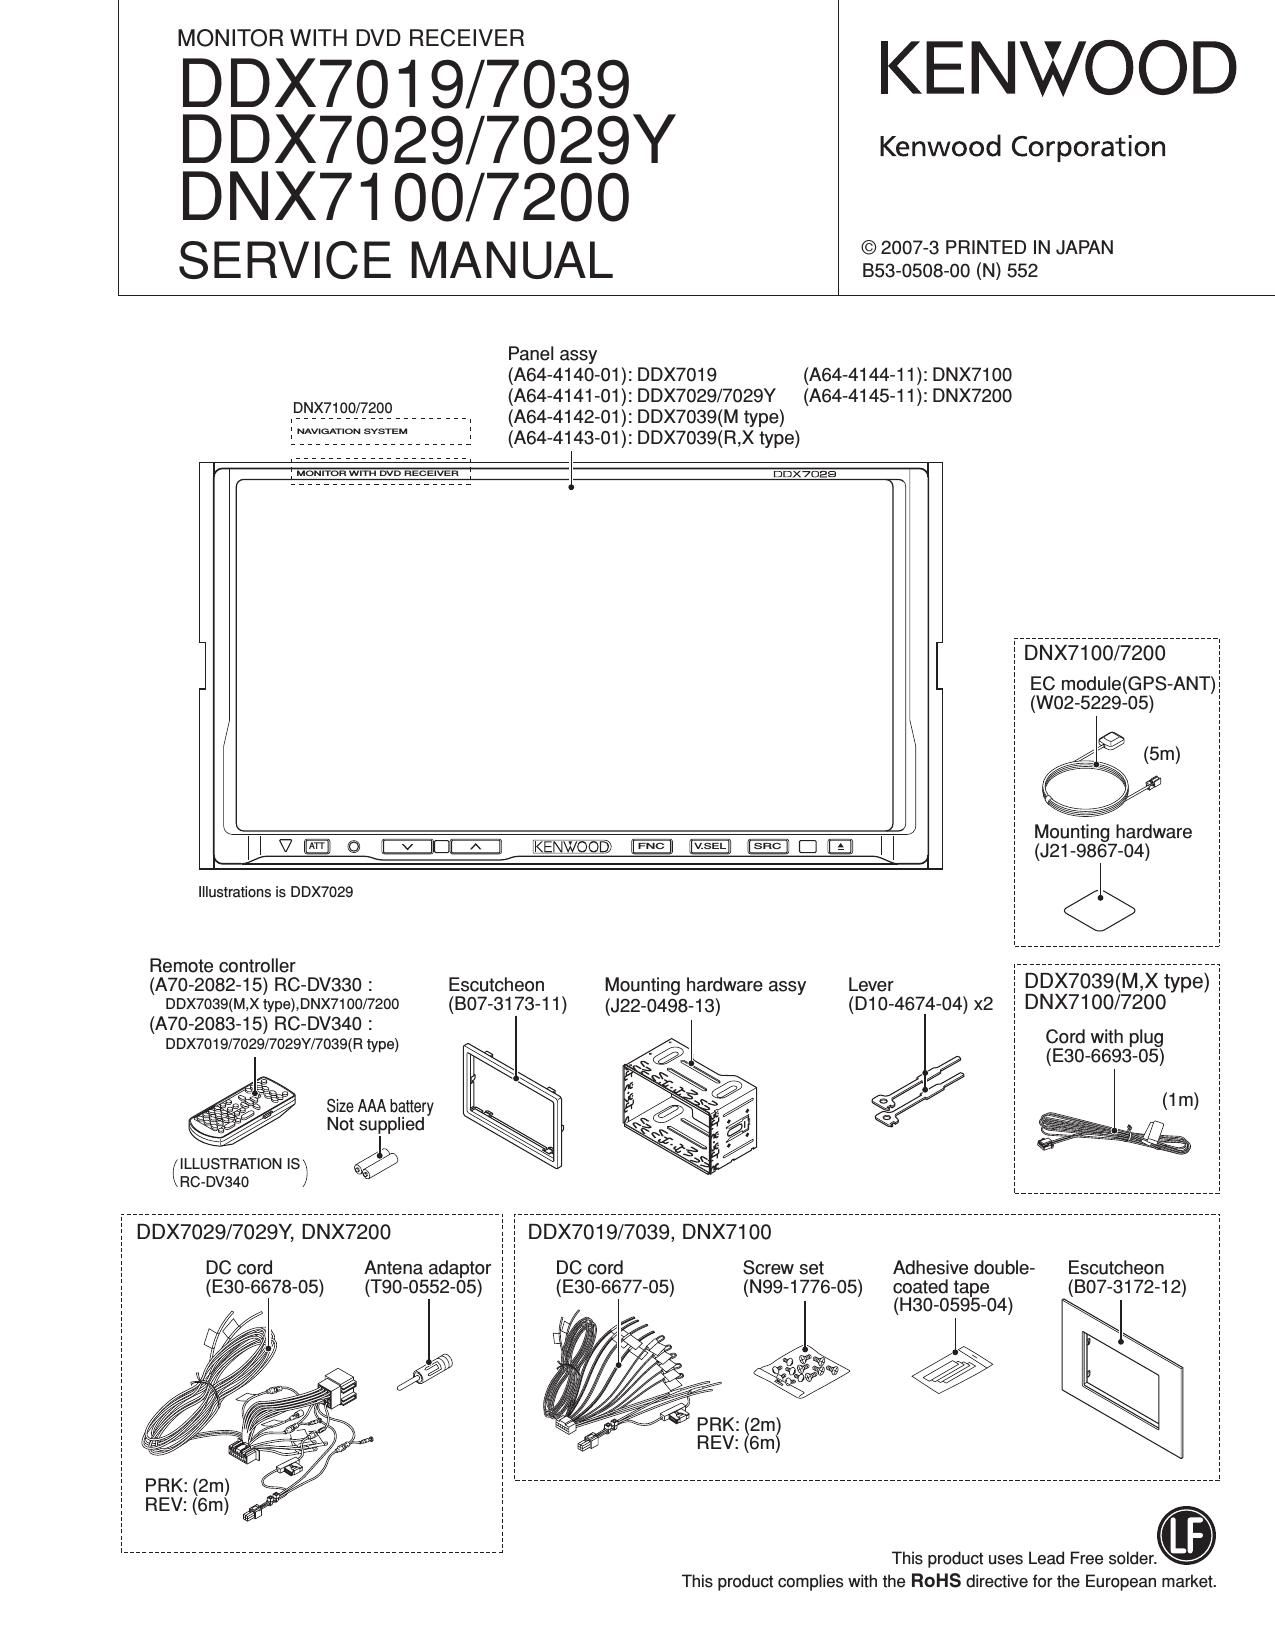 Kenwood DNX 7200 Service Manual